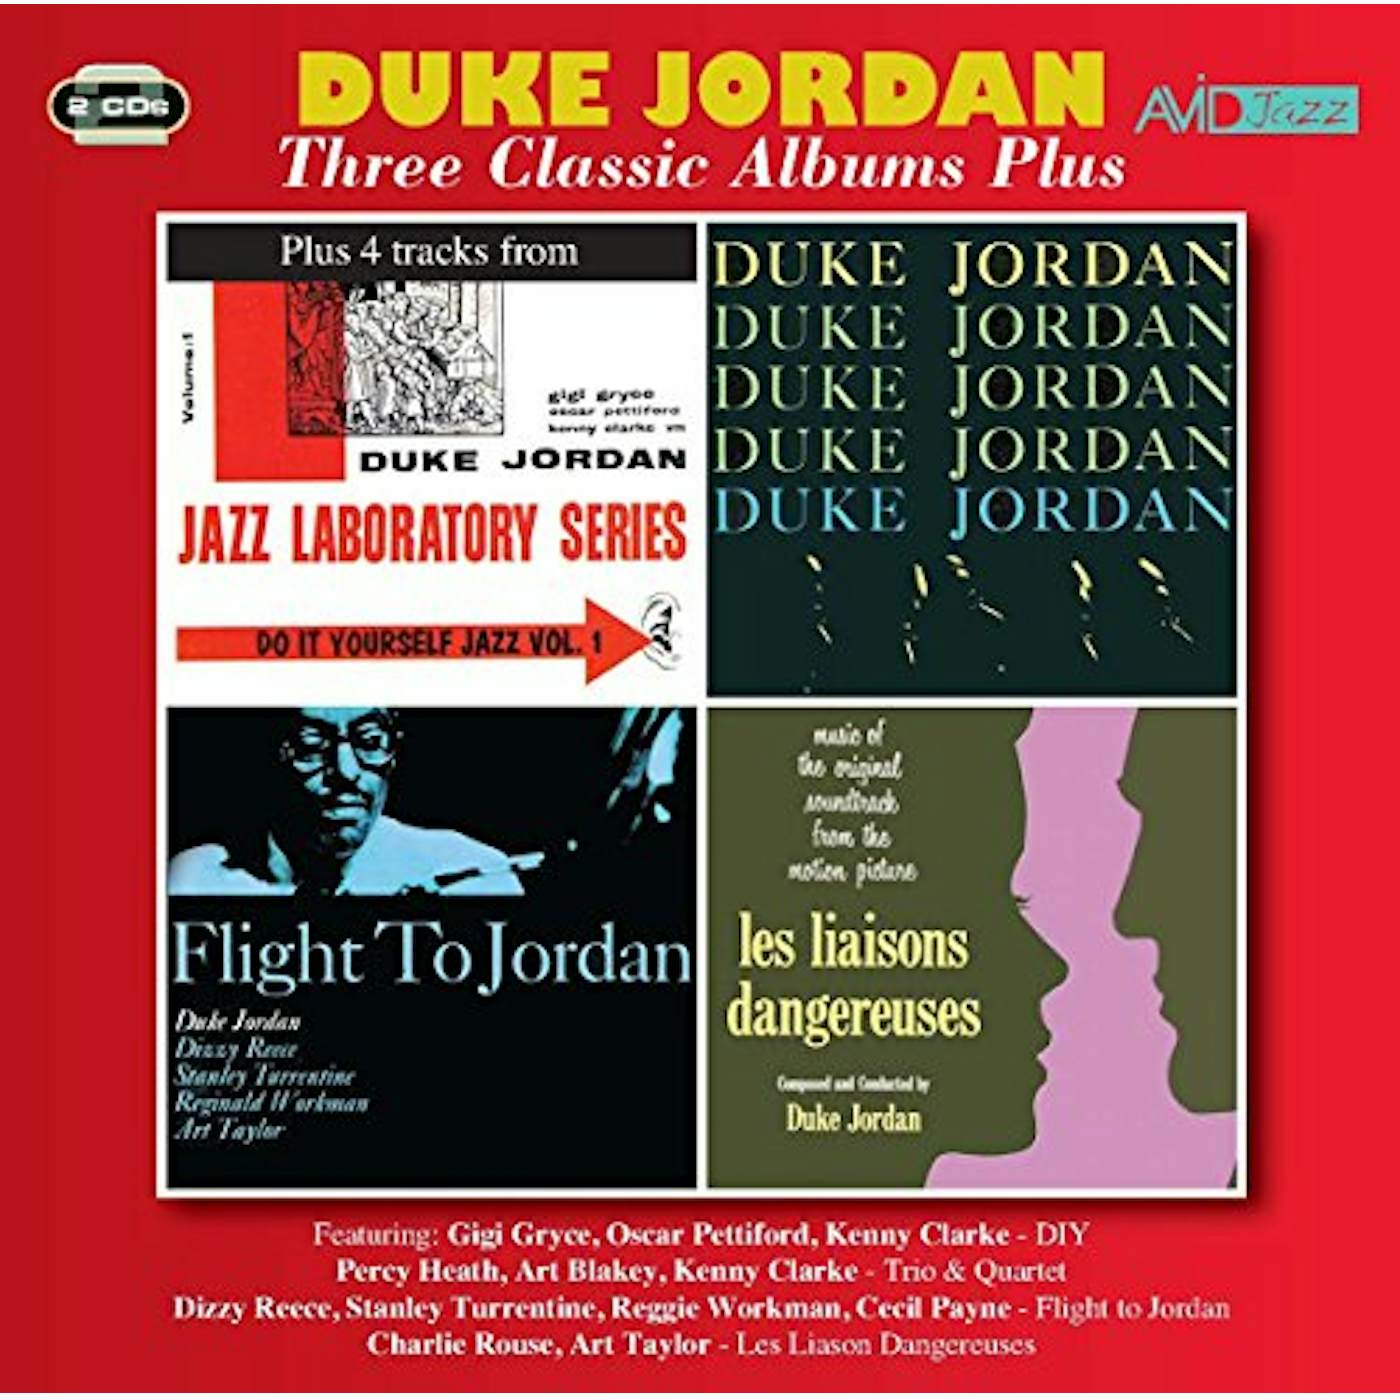 Duke Jordan TRIO & QUARTET / FLIGHT TO JORDAN CD